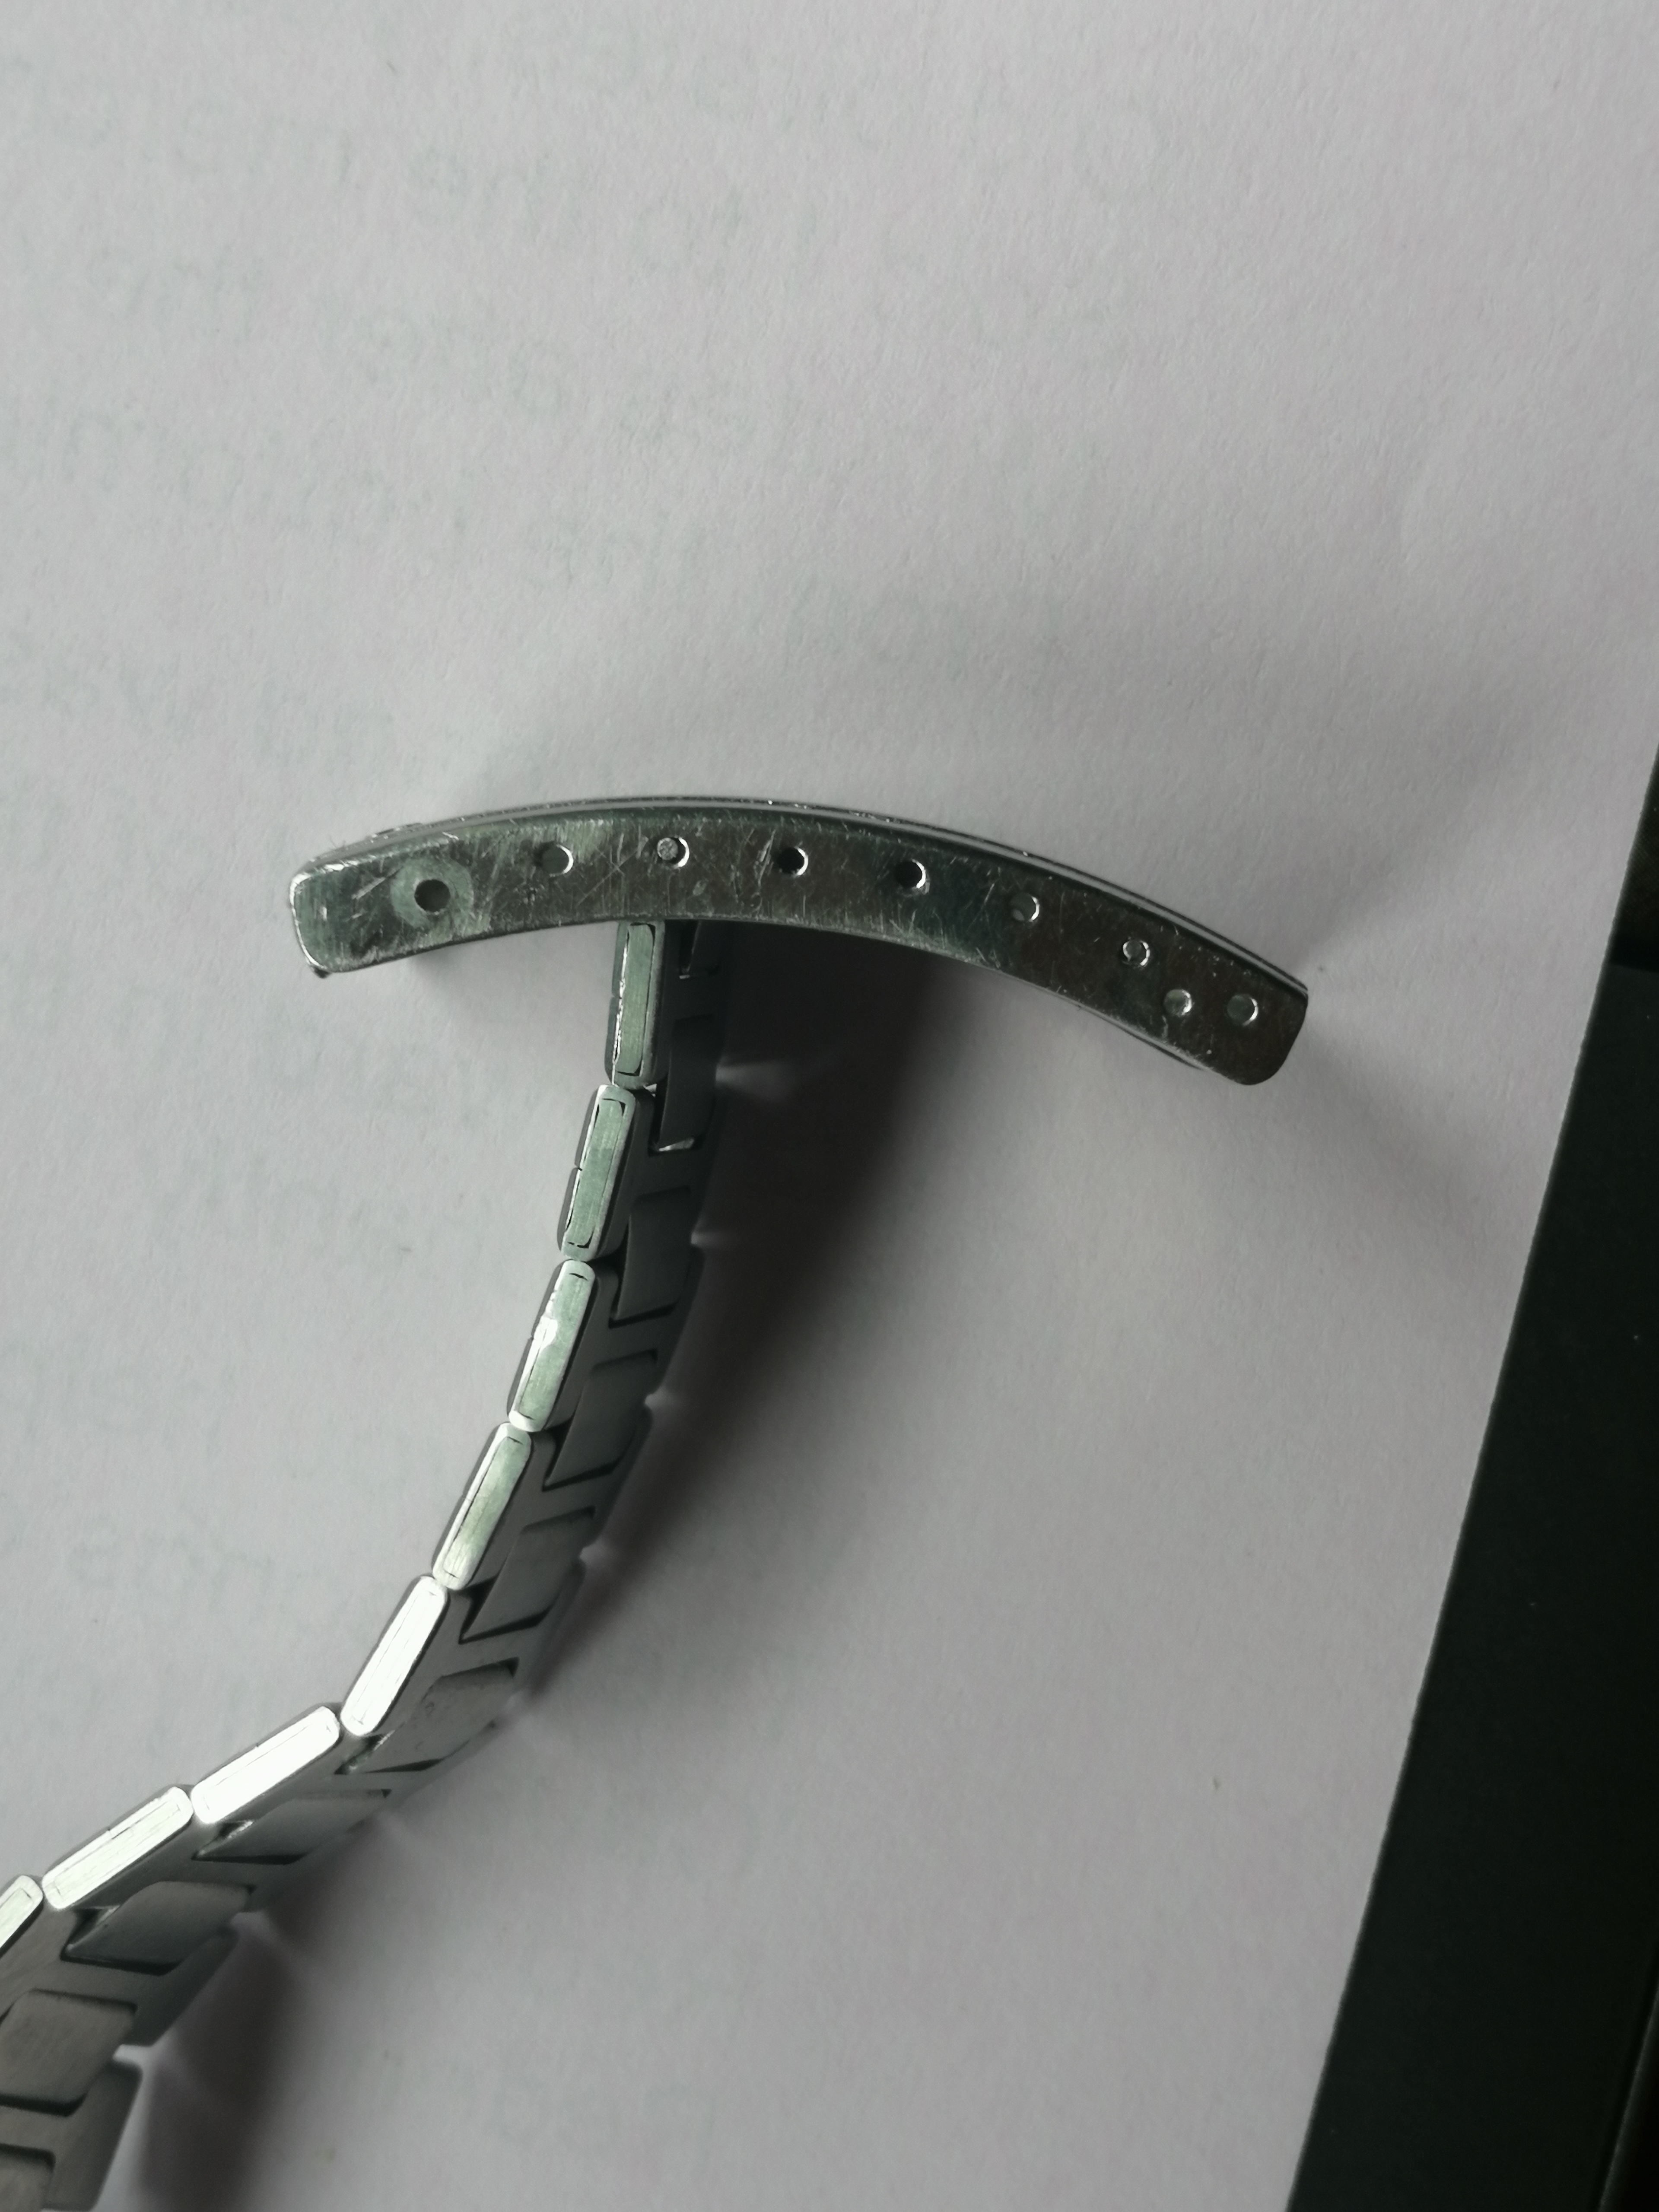 Seiko s/s bracelet replacement - Watch Repairs Help & Advice - Watch Repair  Talk